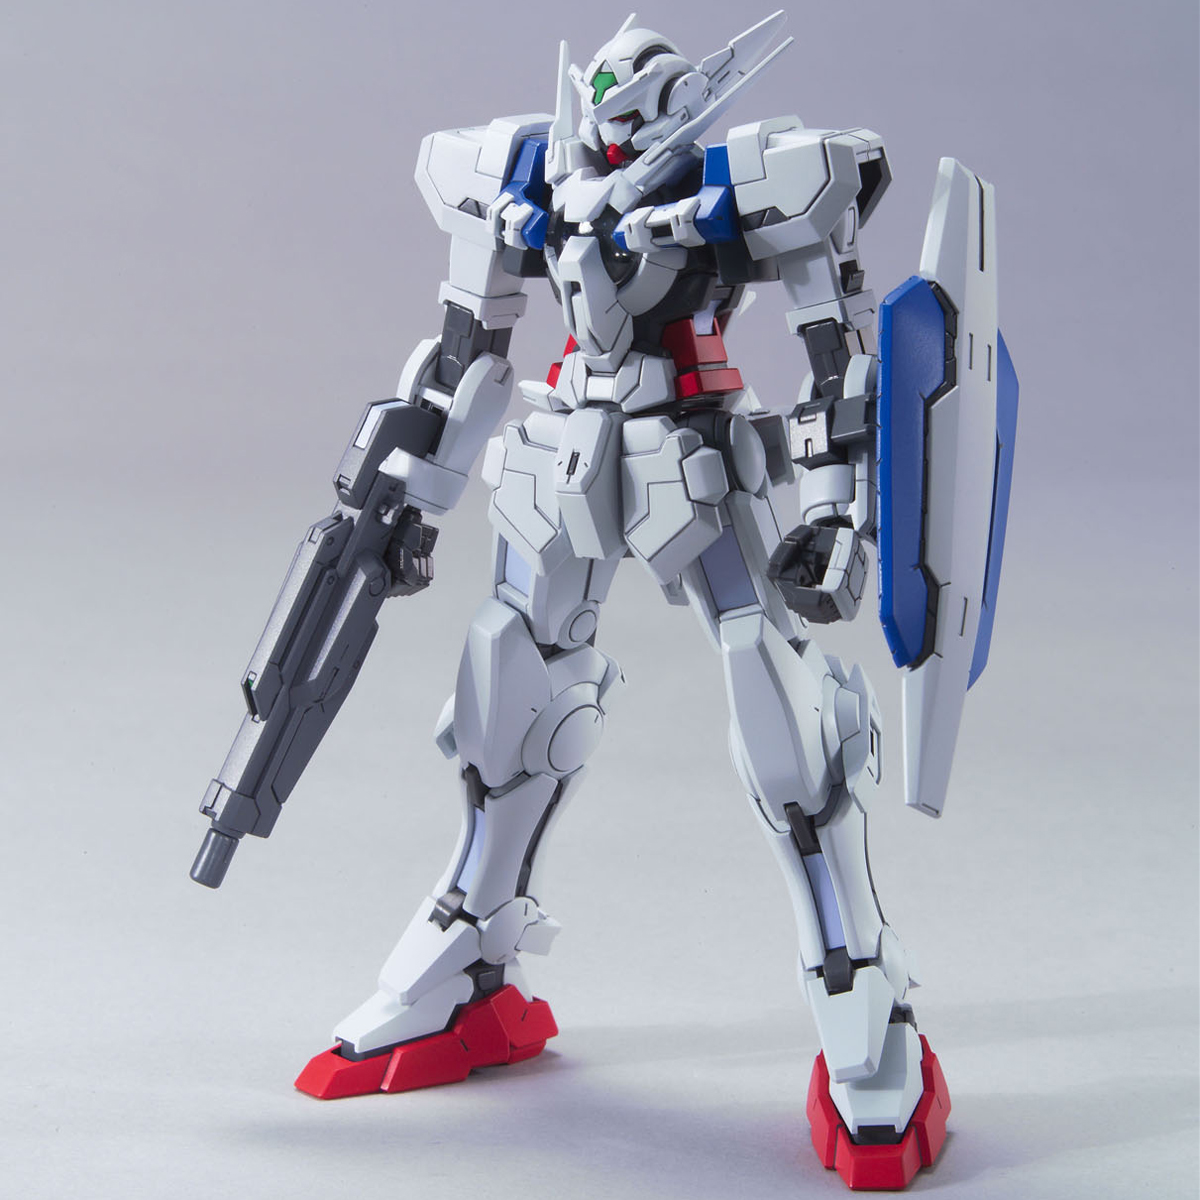 HG 1/144 GNY-001 ガンダムアストレア [Gundam Astraea] 0164249 5060654